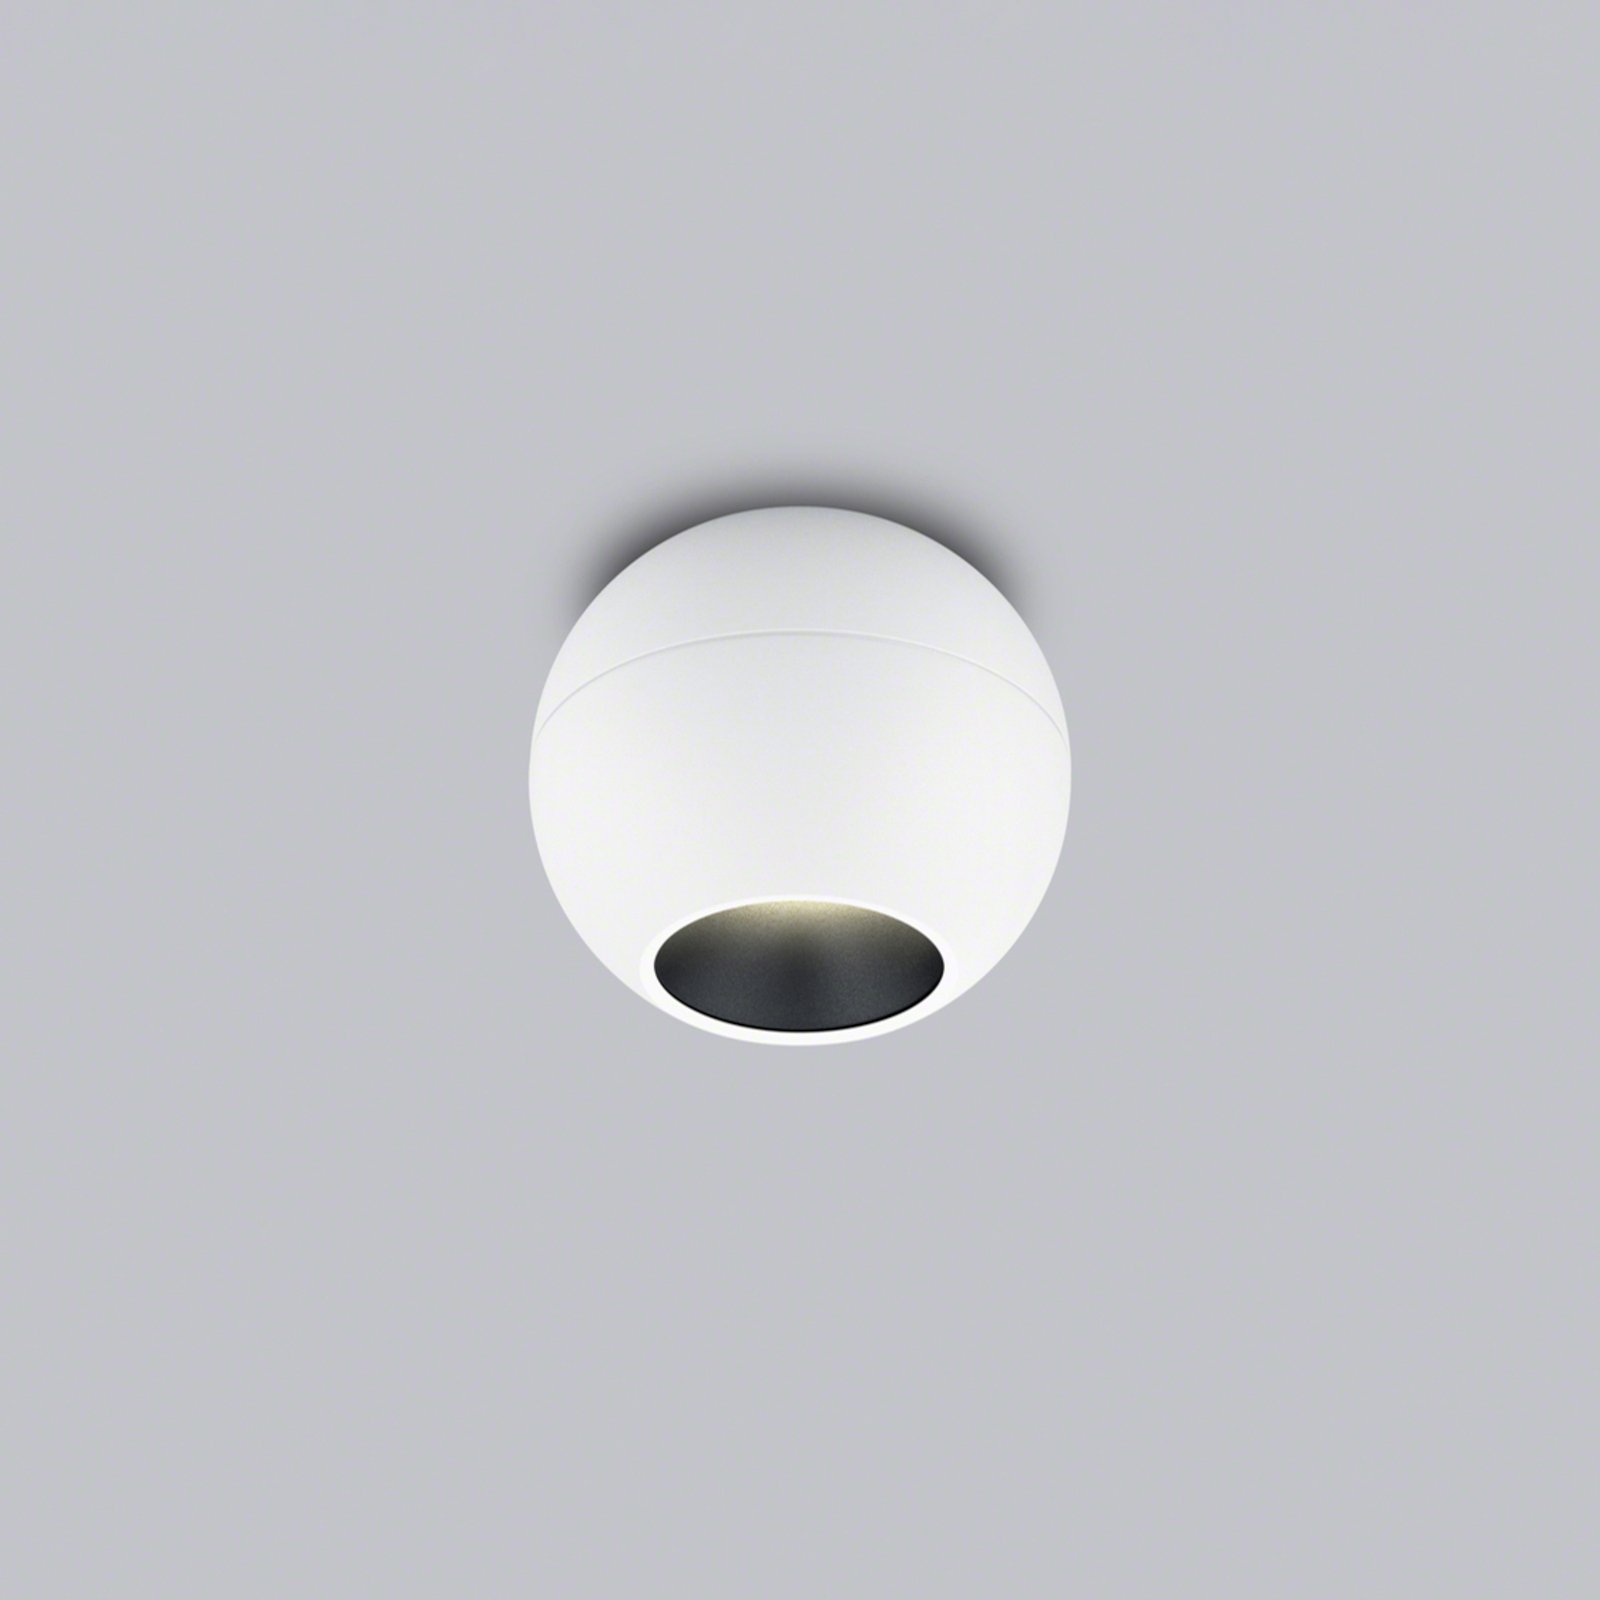 Helestra Eto LED downlight Ø 10 cm 927 white